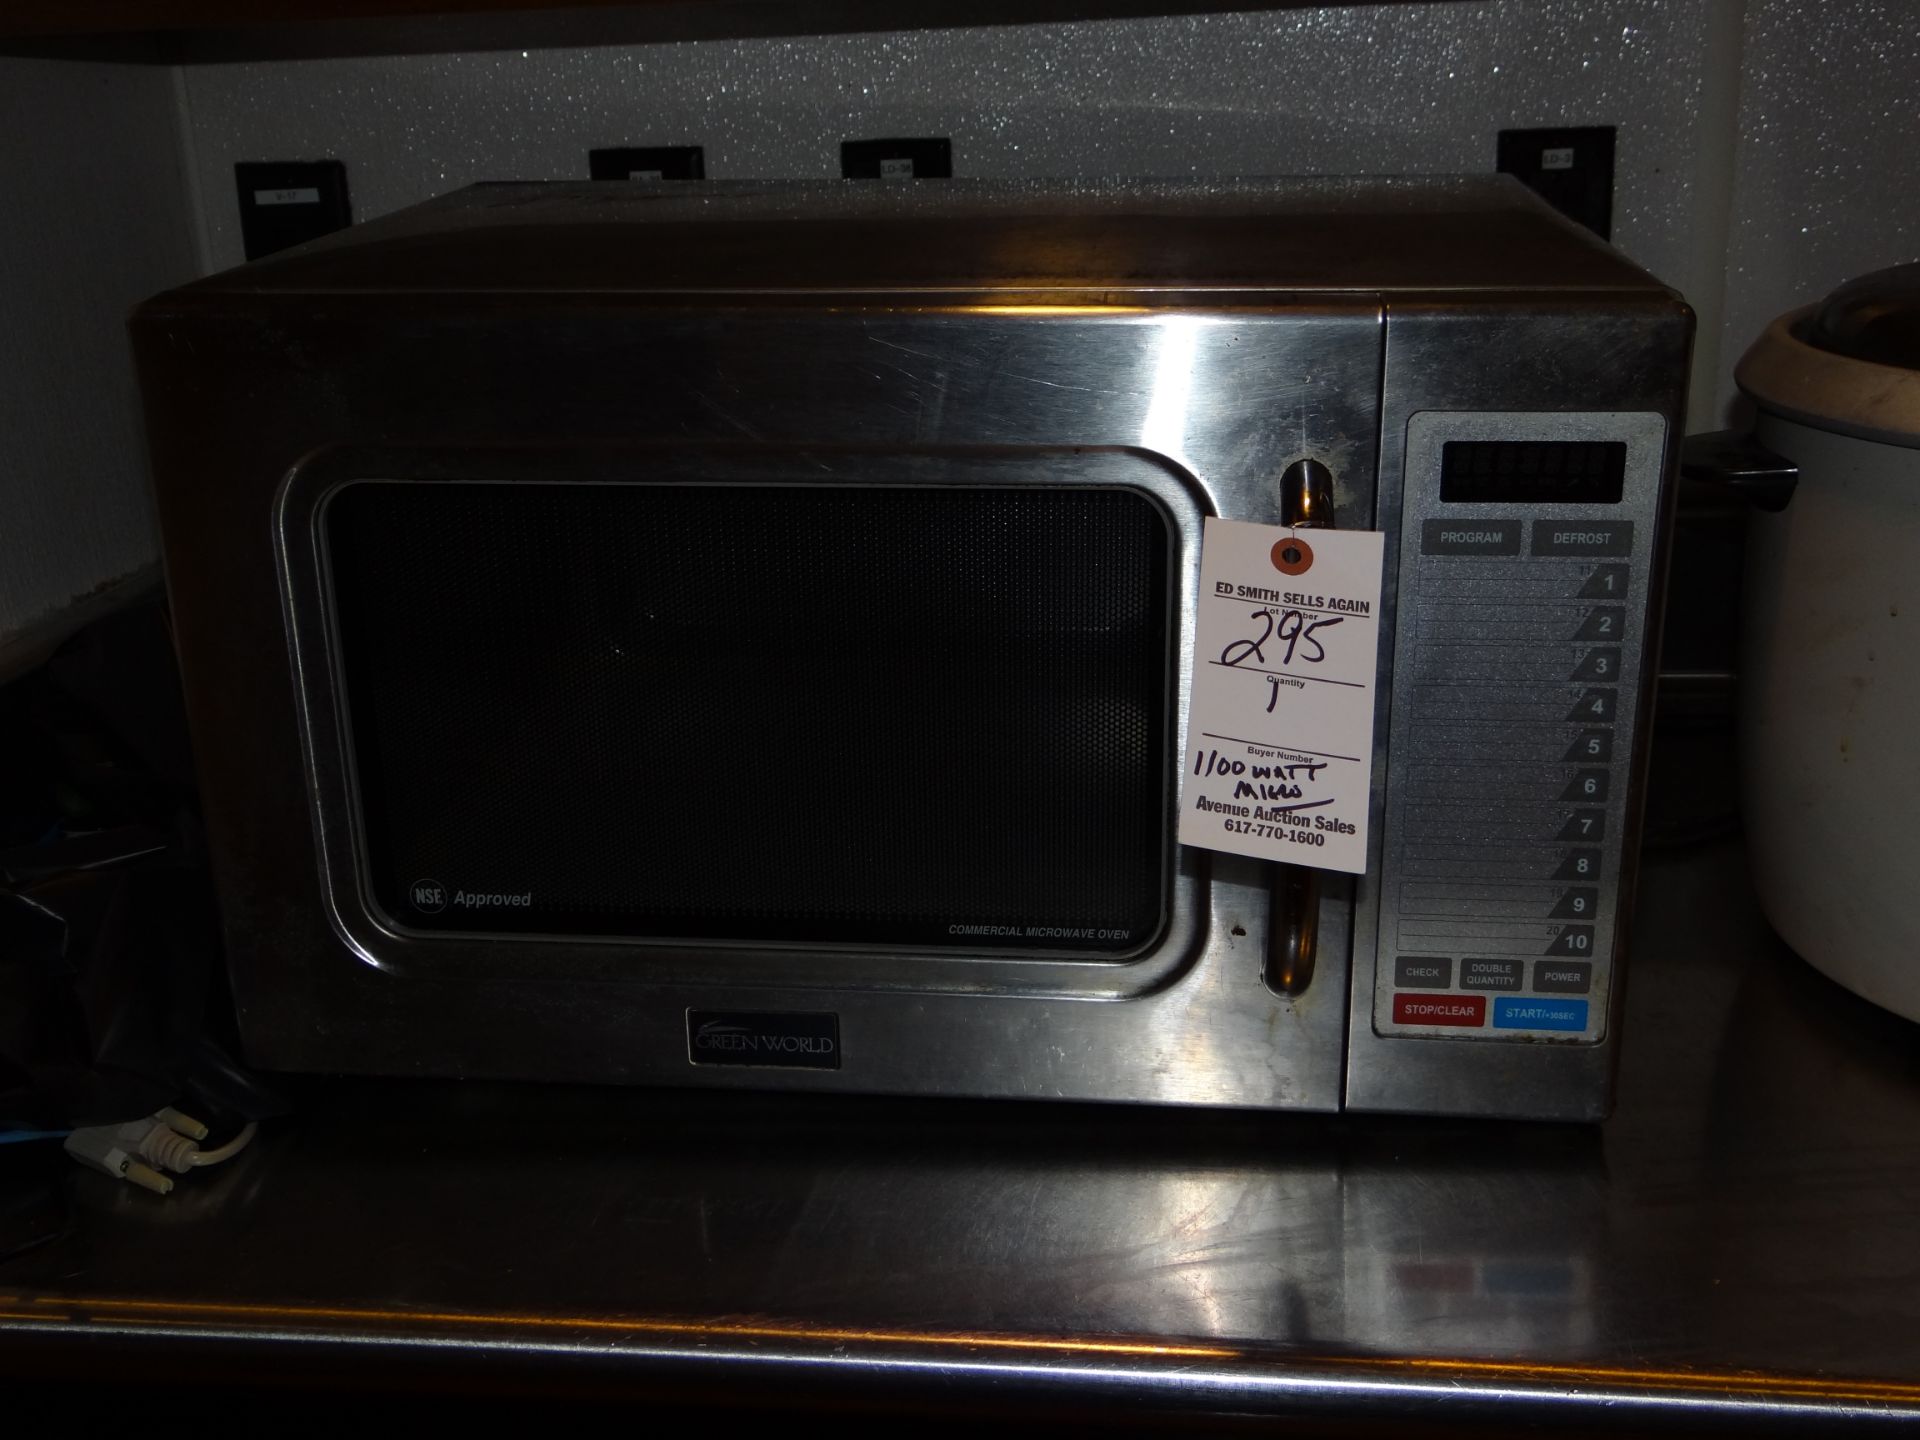 (1) Green World 1100 WATT Microwave